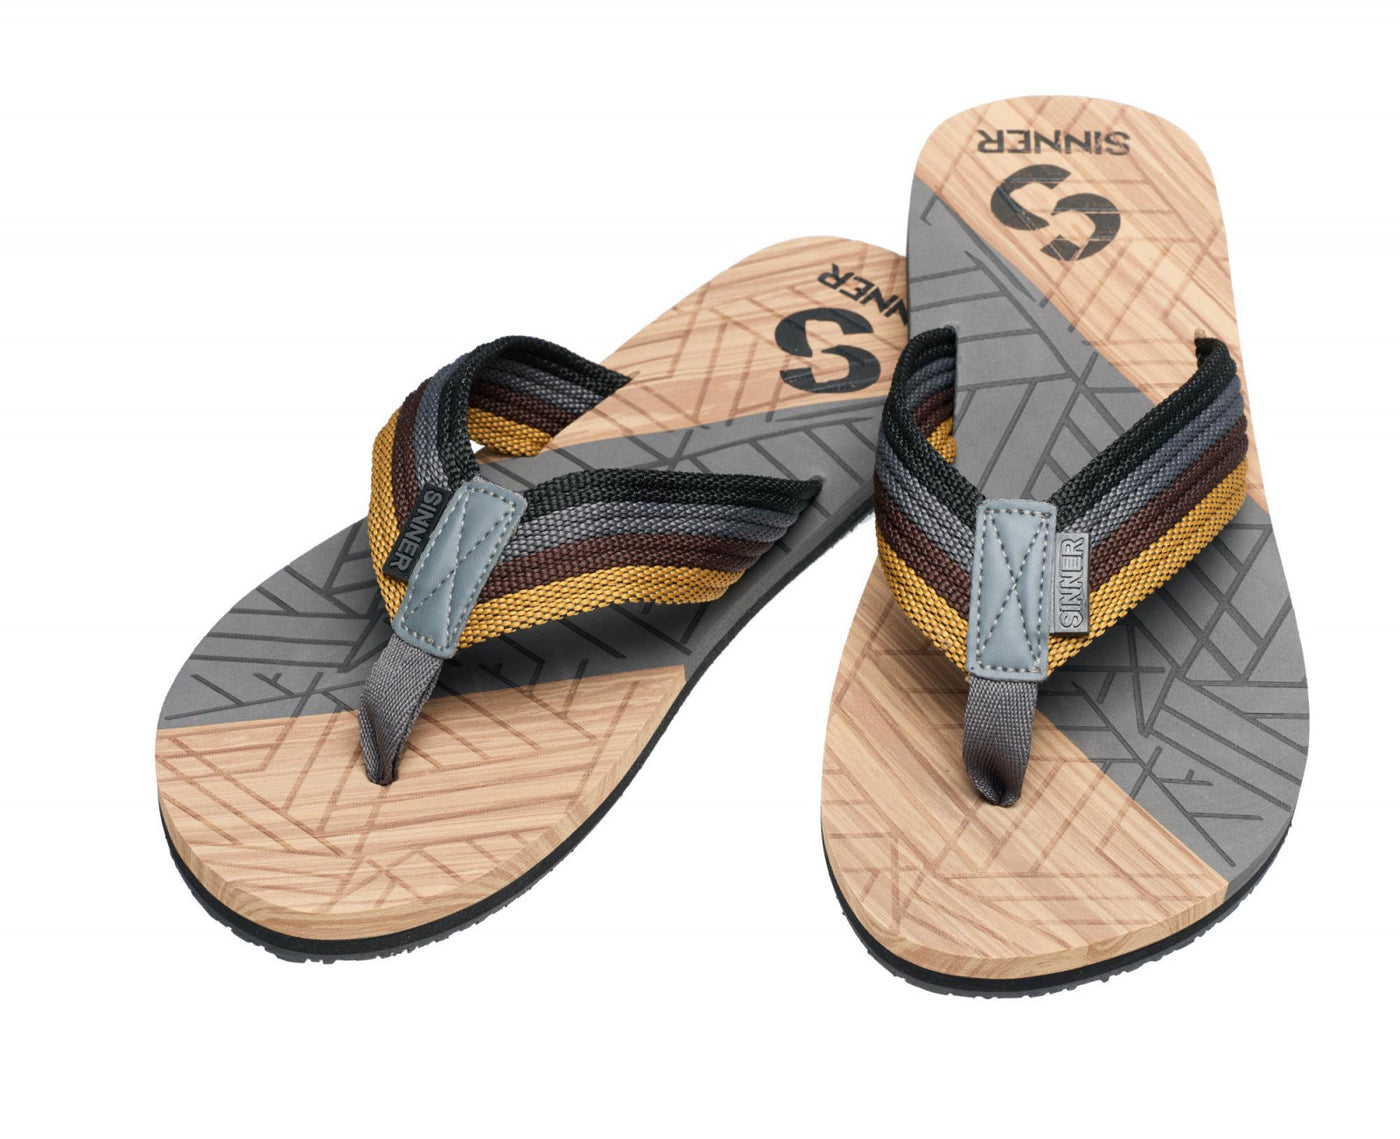 Manado slipper